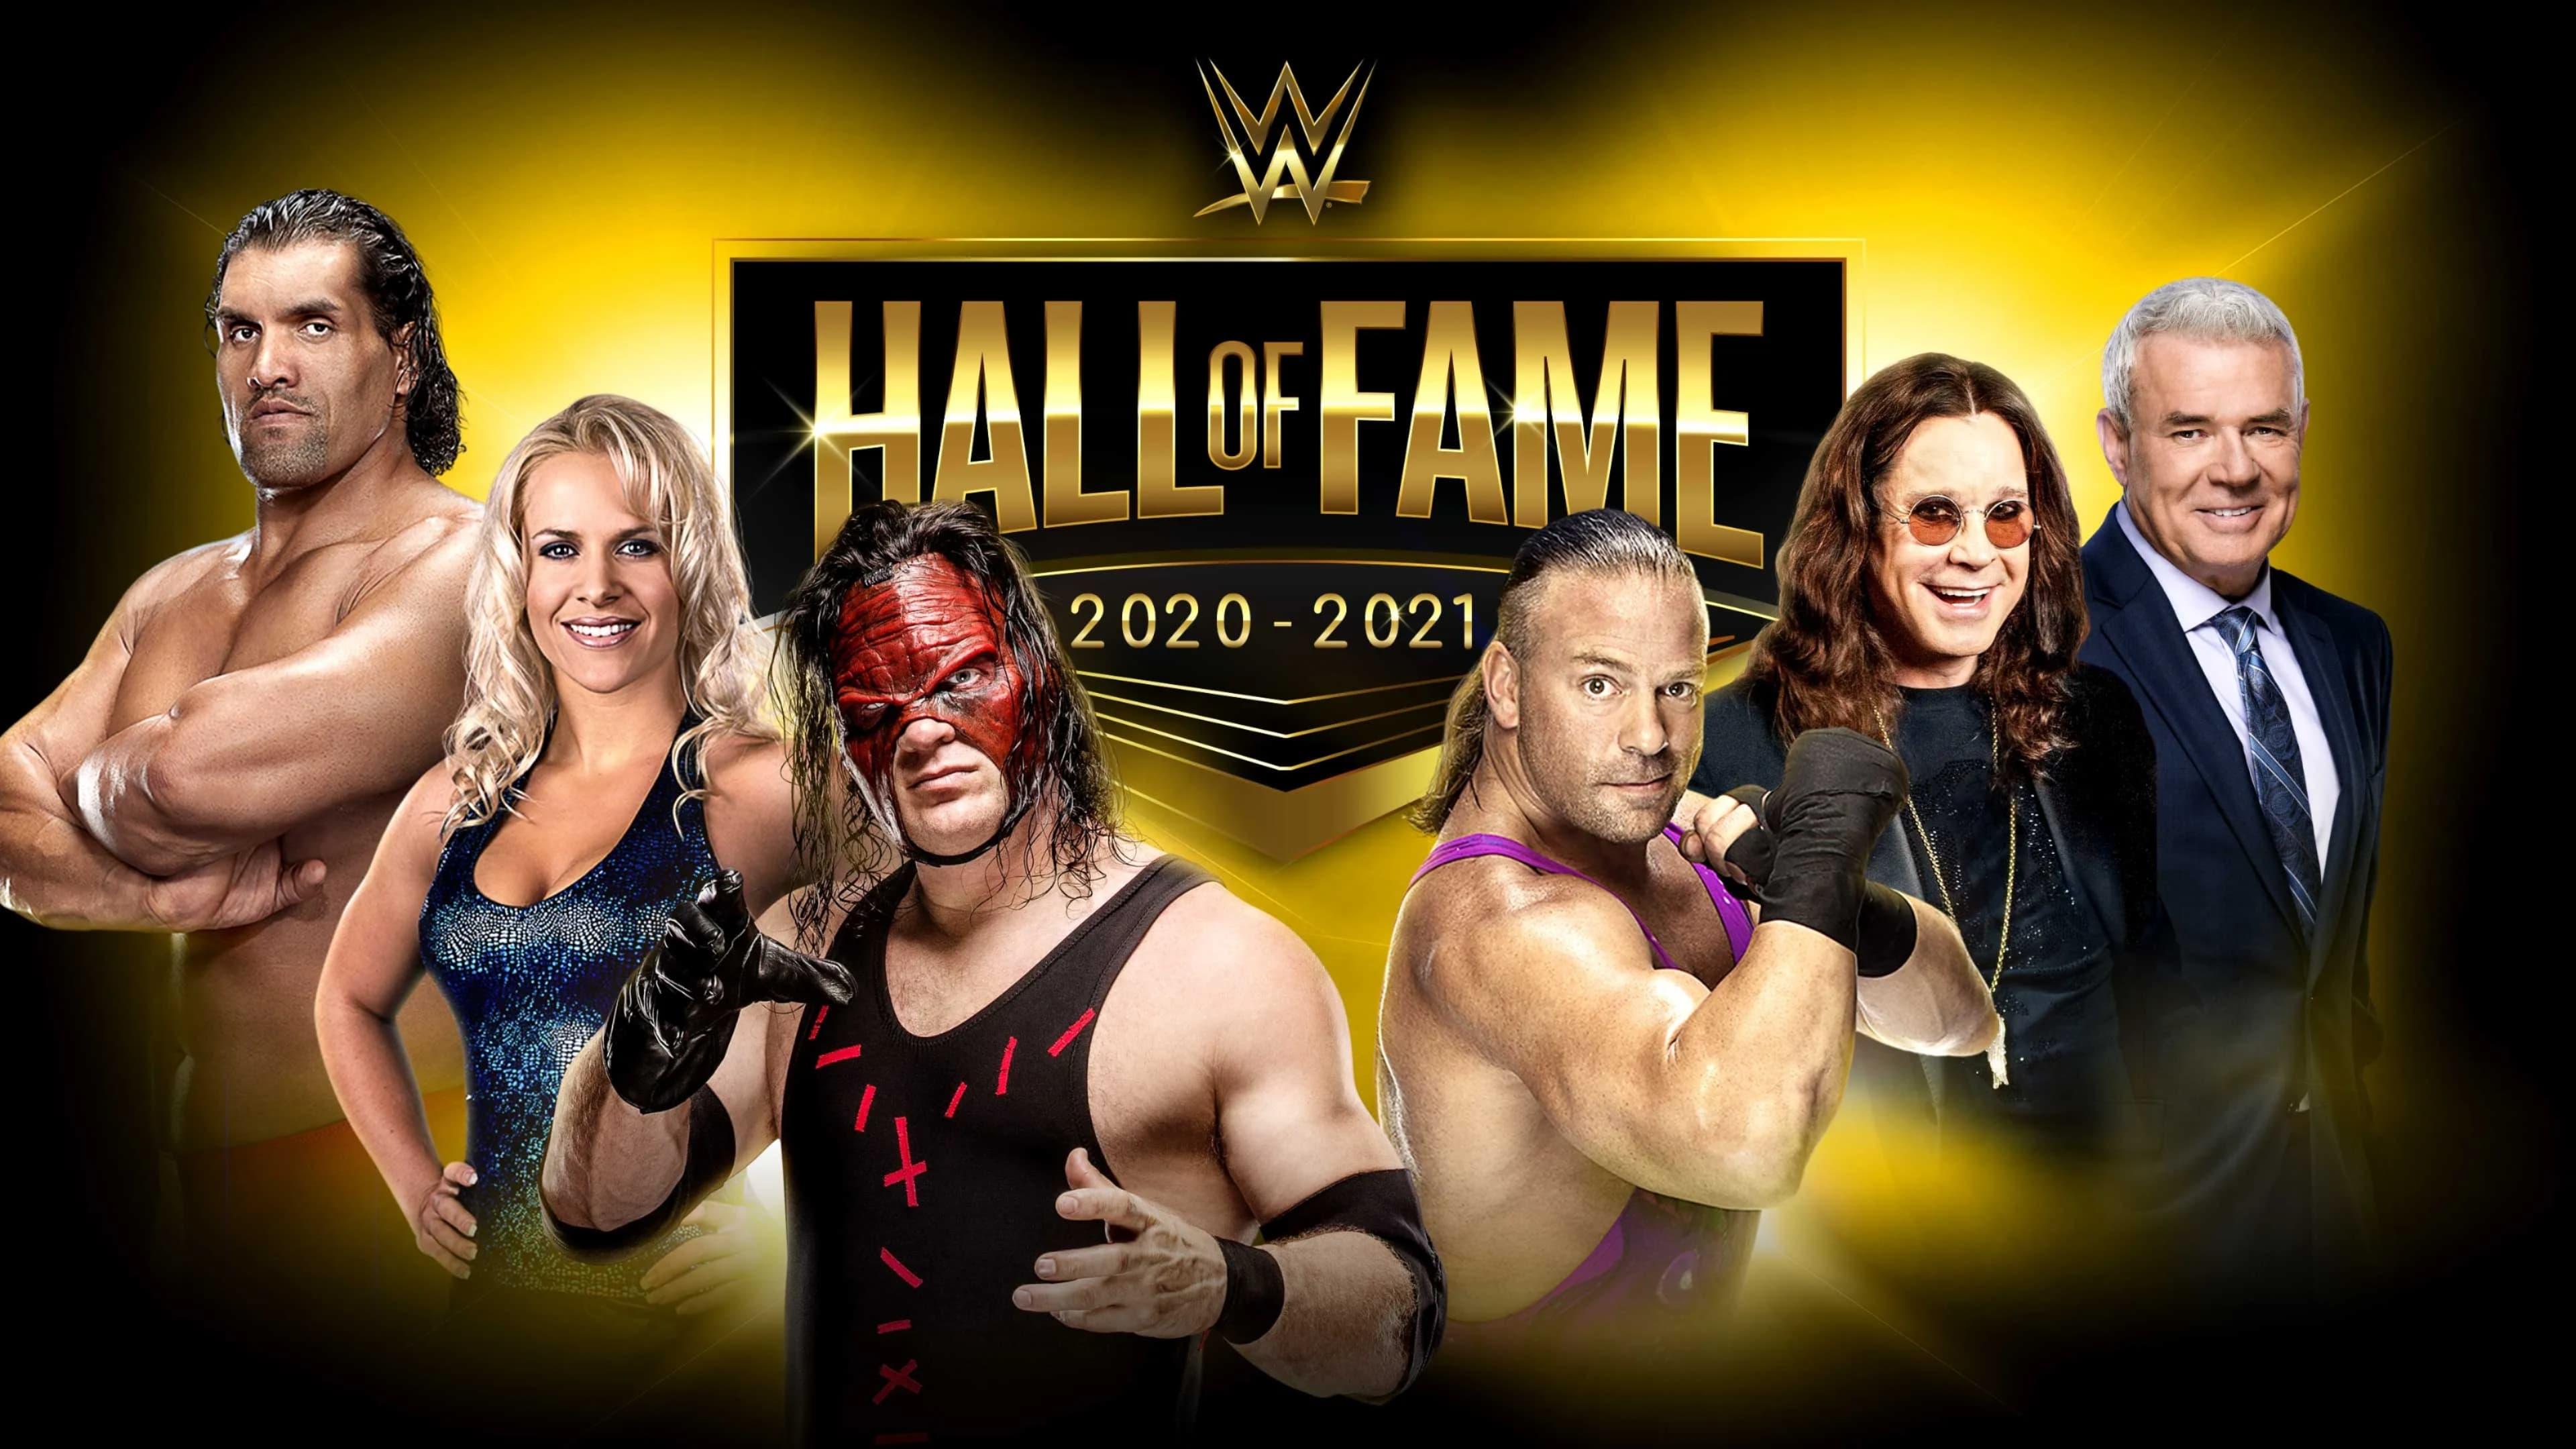 WWE Hall Of Fame 2021 backdrop